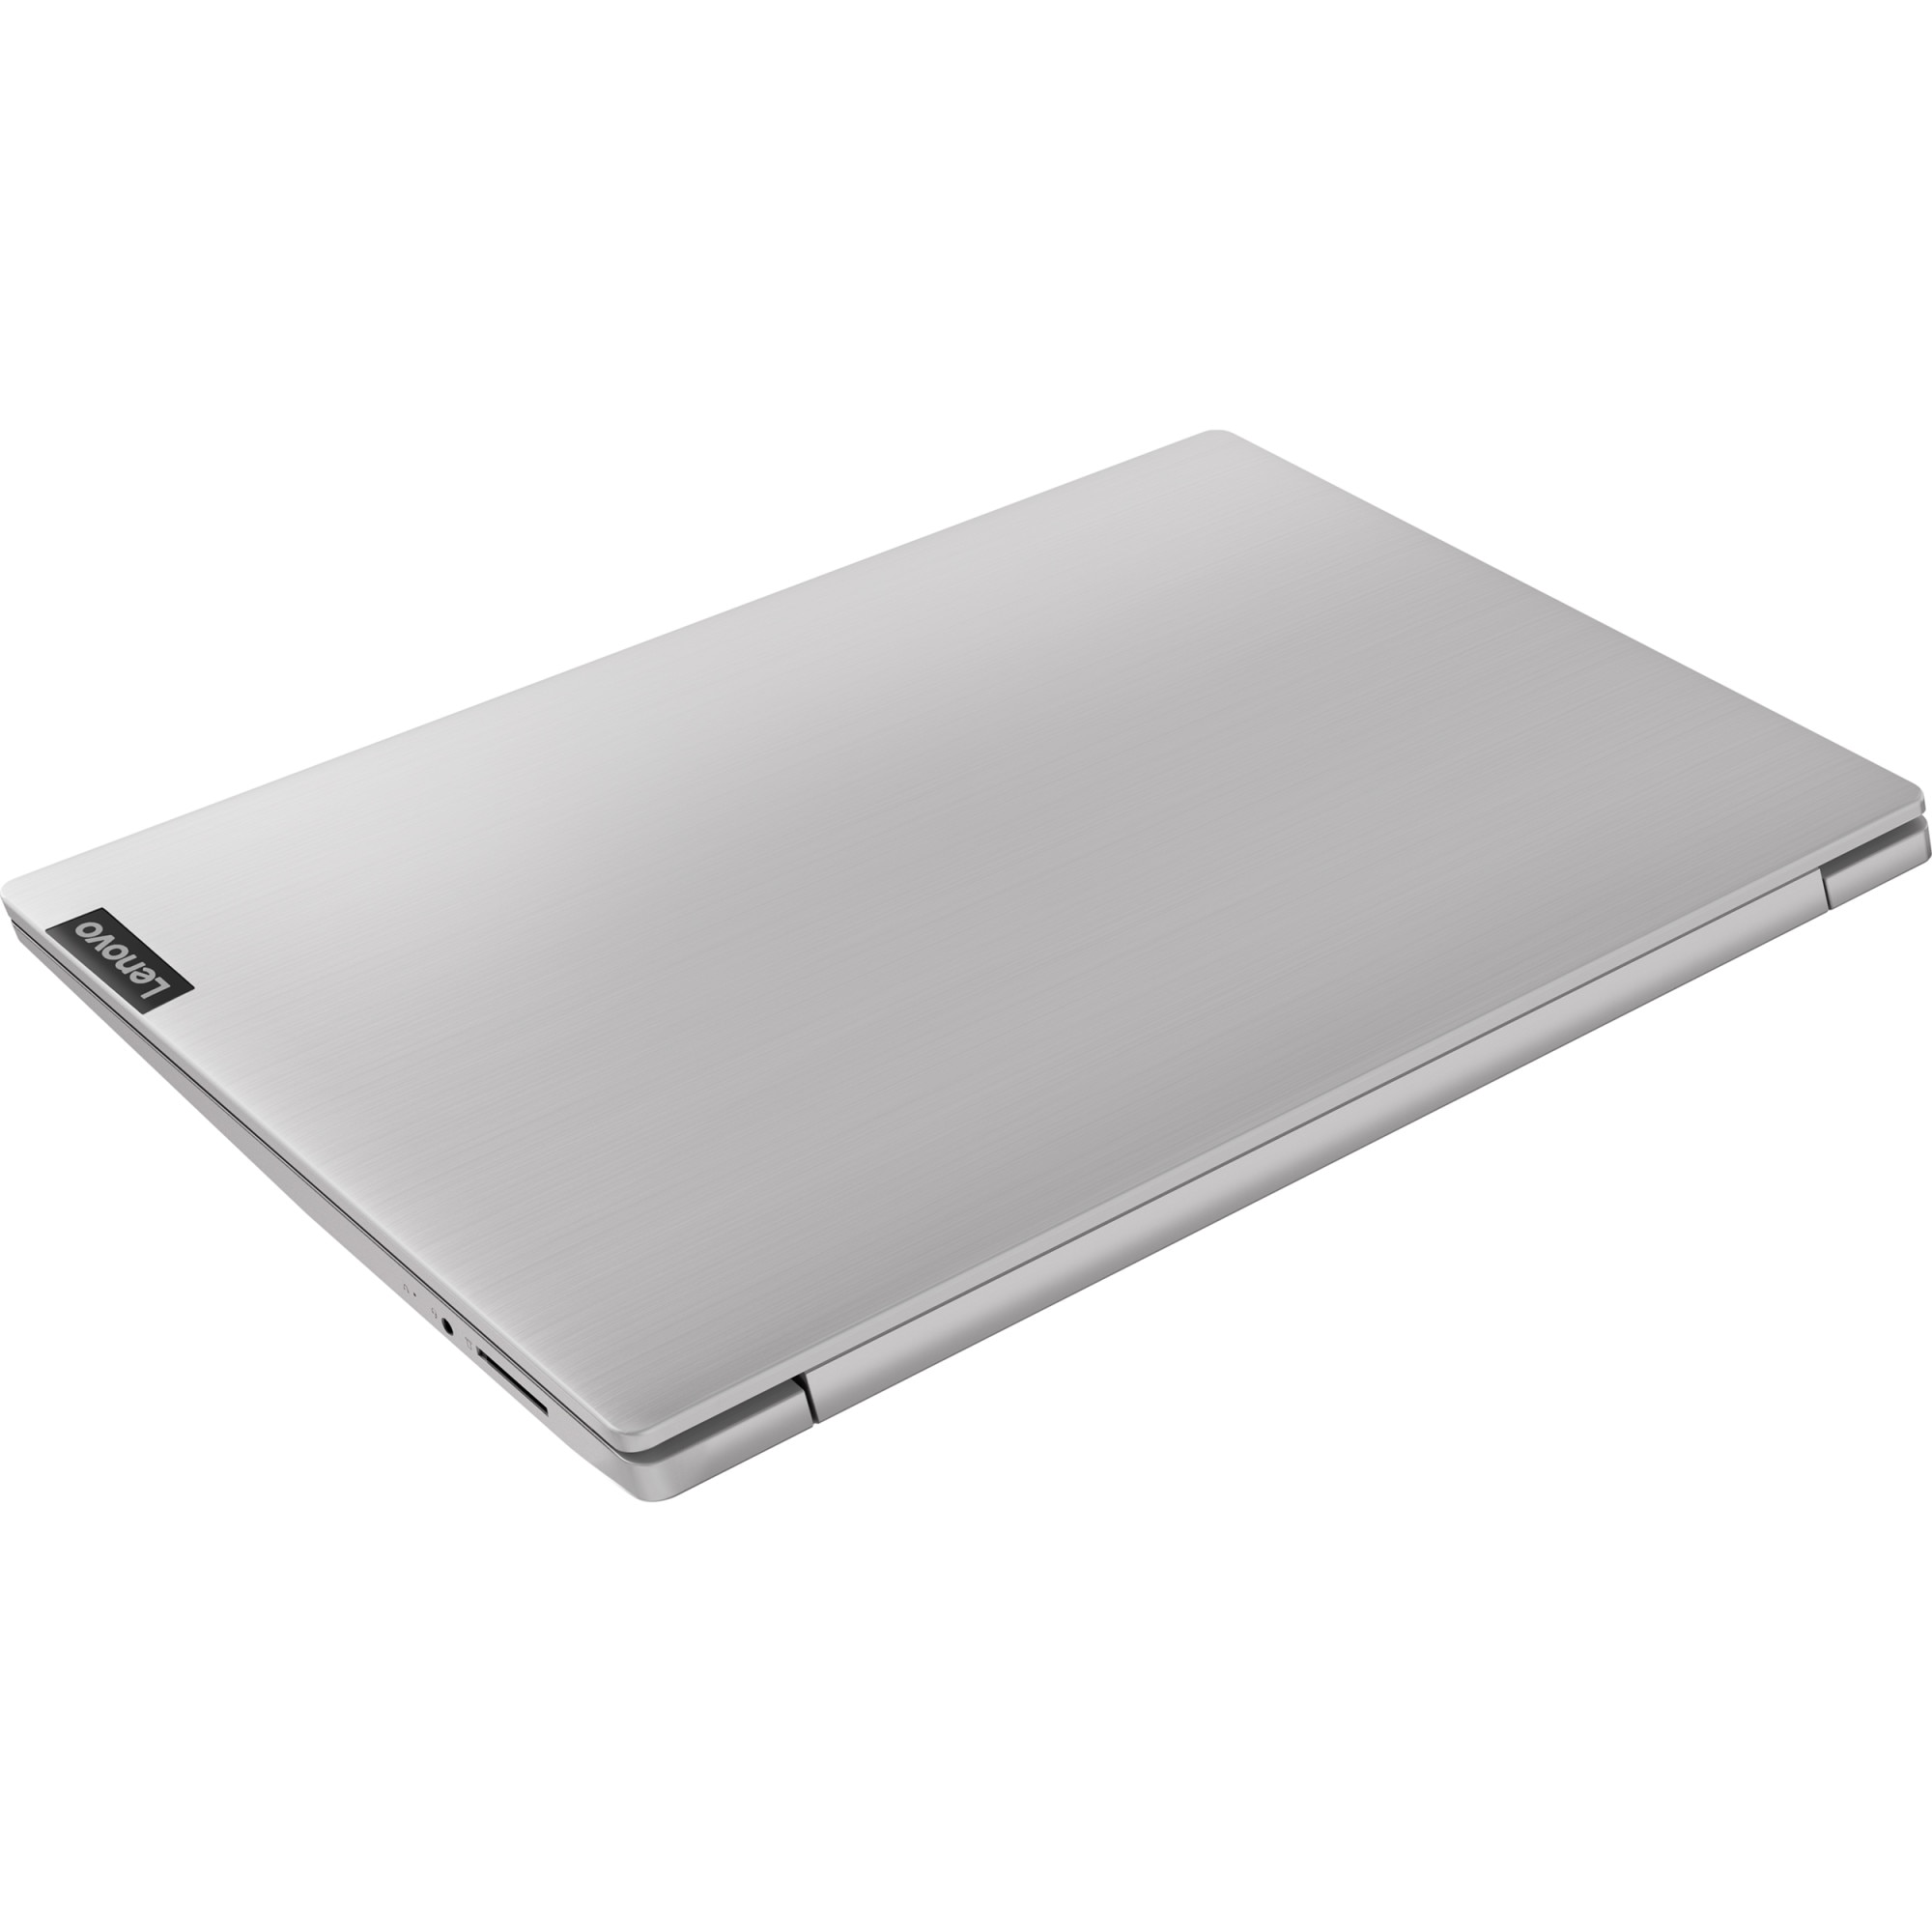 Lenovo IdeaPad S145-15API 81UT - AMD Ryzen 3 - 3200U / up to 3.5